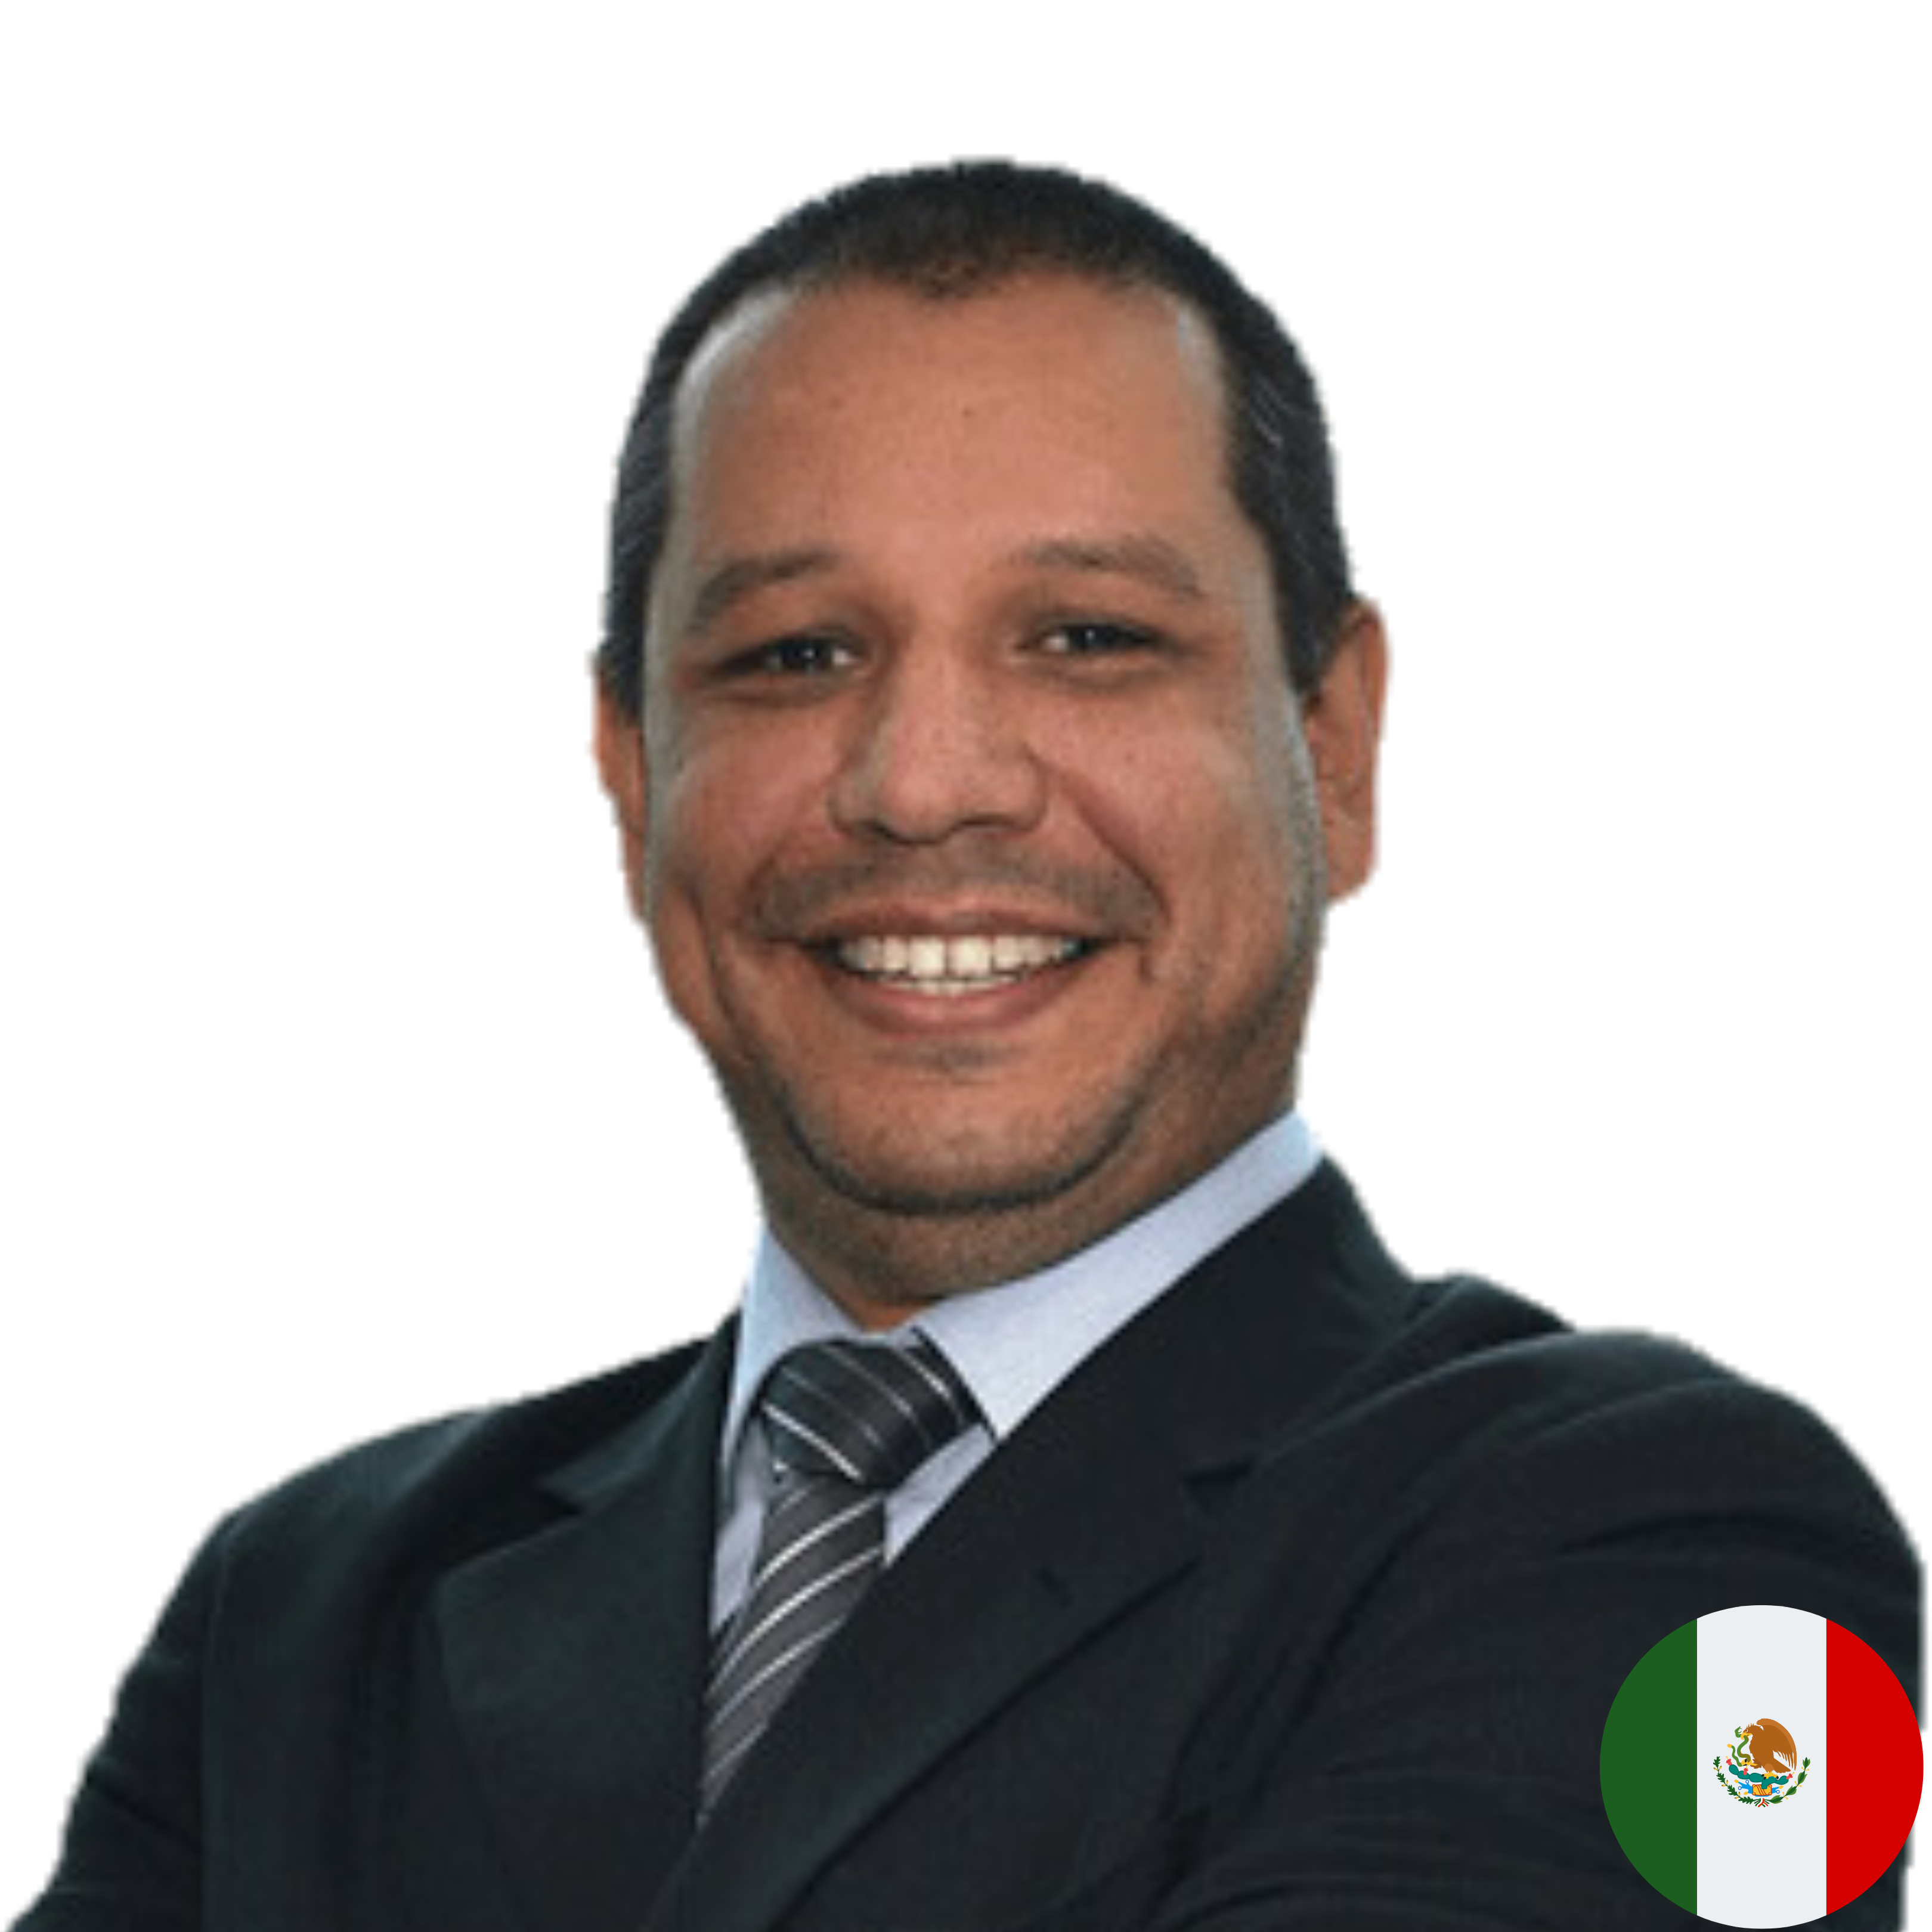 Paul Martin Villacorta Chávez, PMP, SDI, ISO21500, PM4R